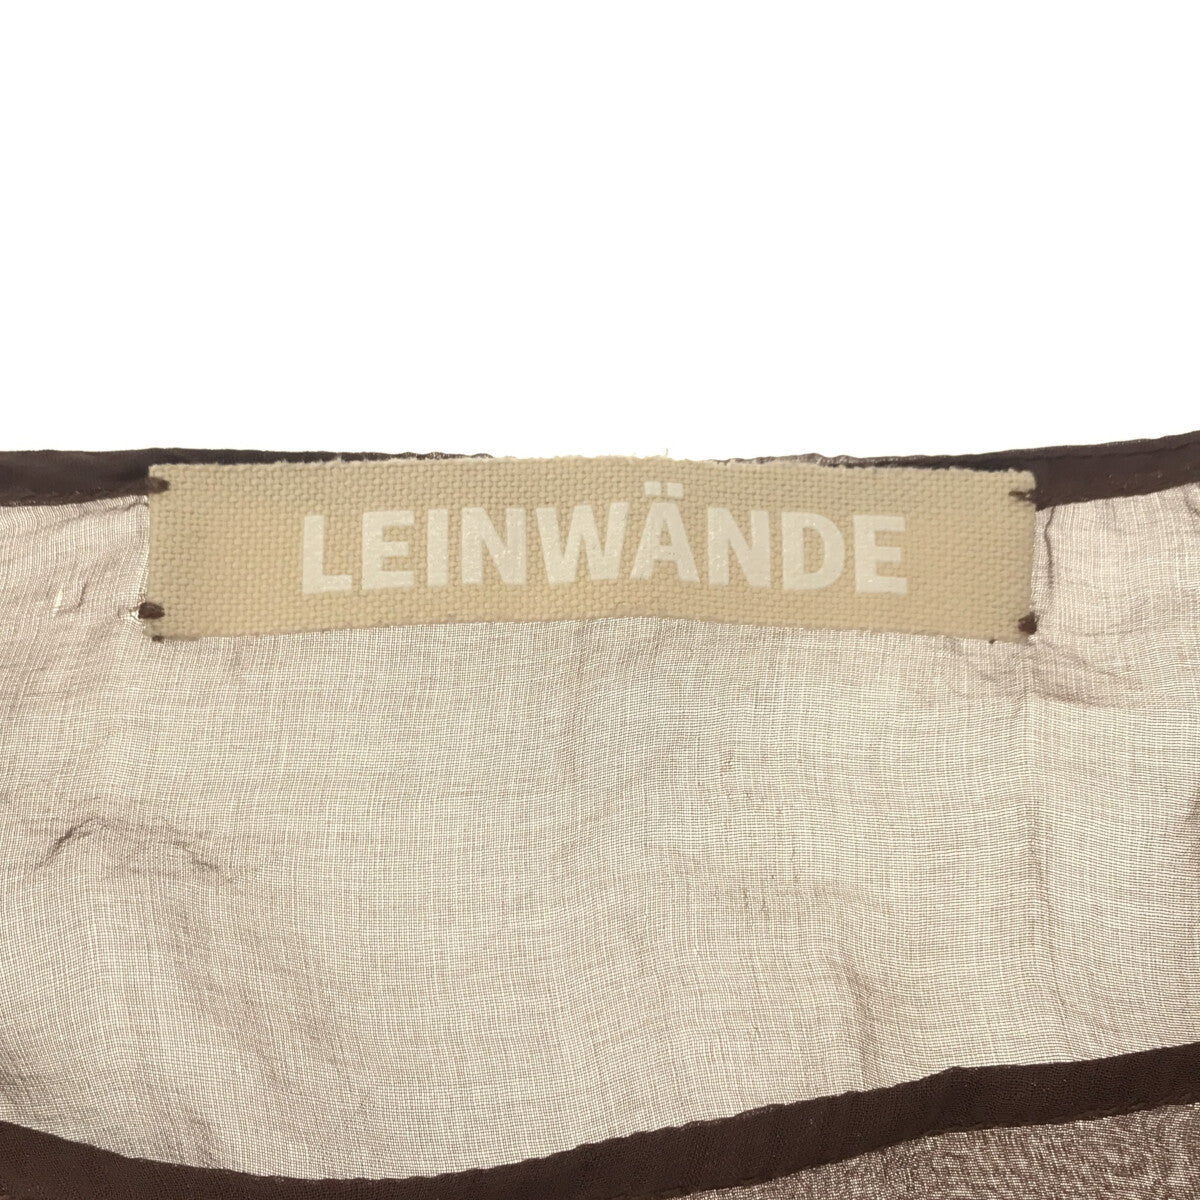 LEINWANDE / ラインヴァンド | シアー クルーネック プルオーバー | F | ブラウン | レディース